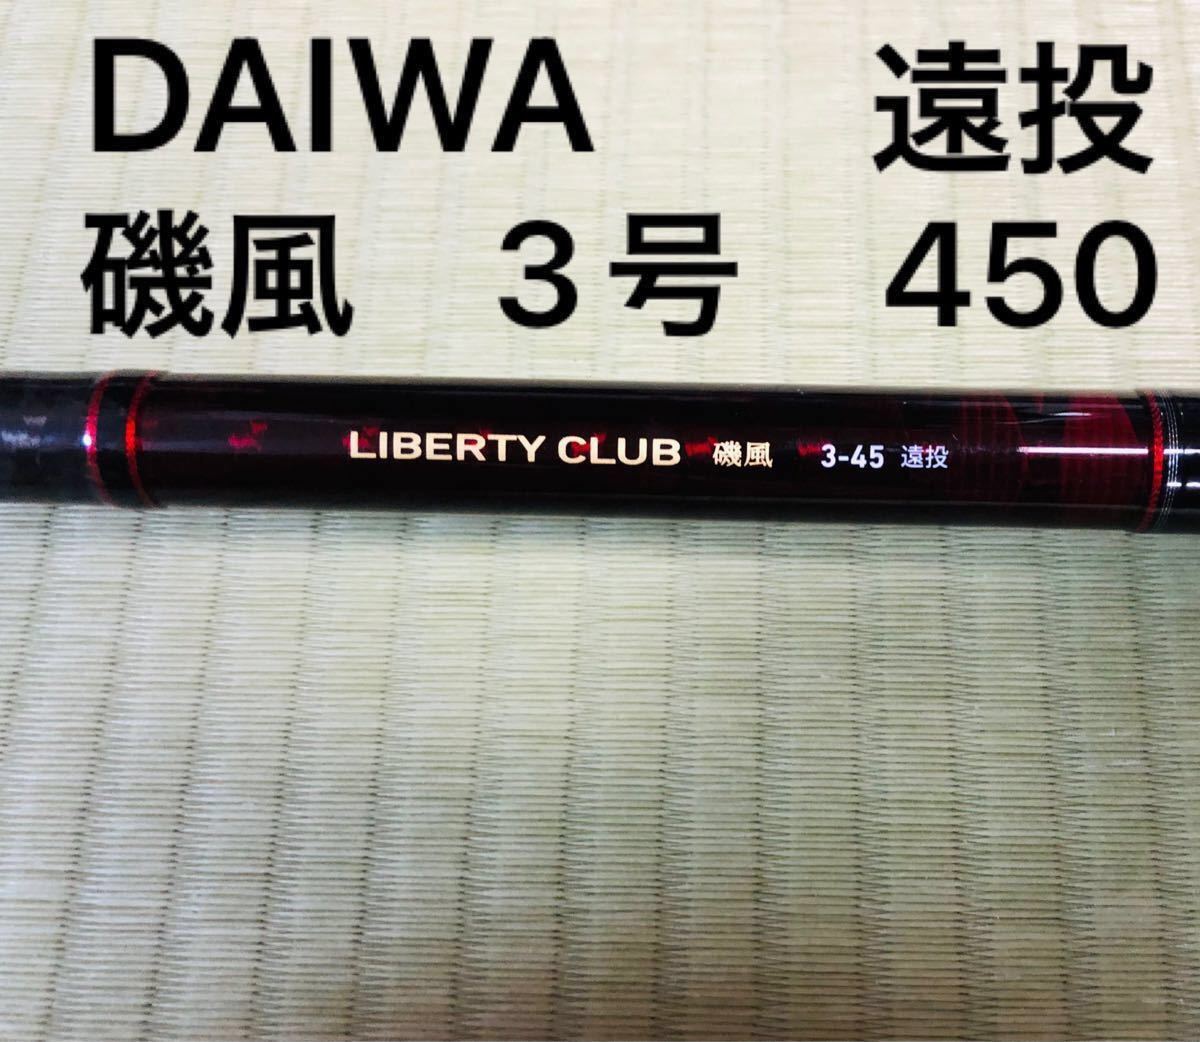 DAIWA ダイワ リバティクラブ 磯風 3-45 遠投K 振出竿 3号 450 - organicfarmermag.com